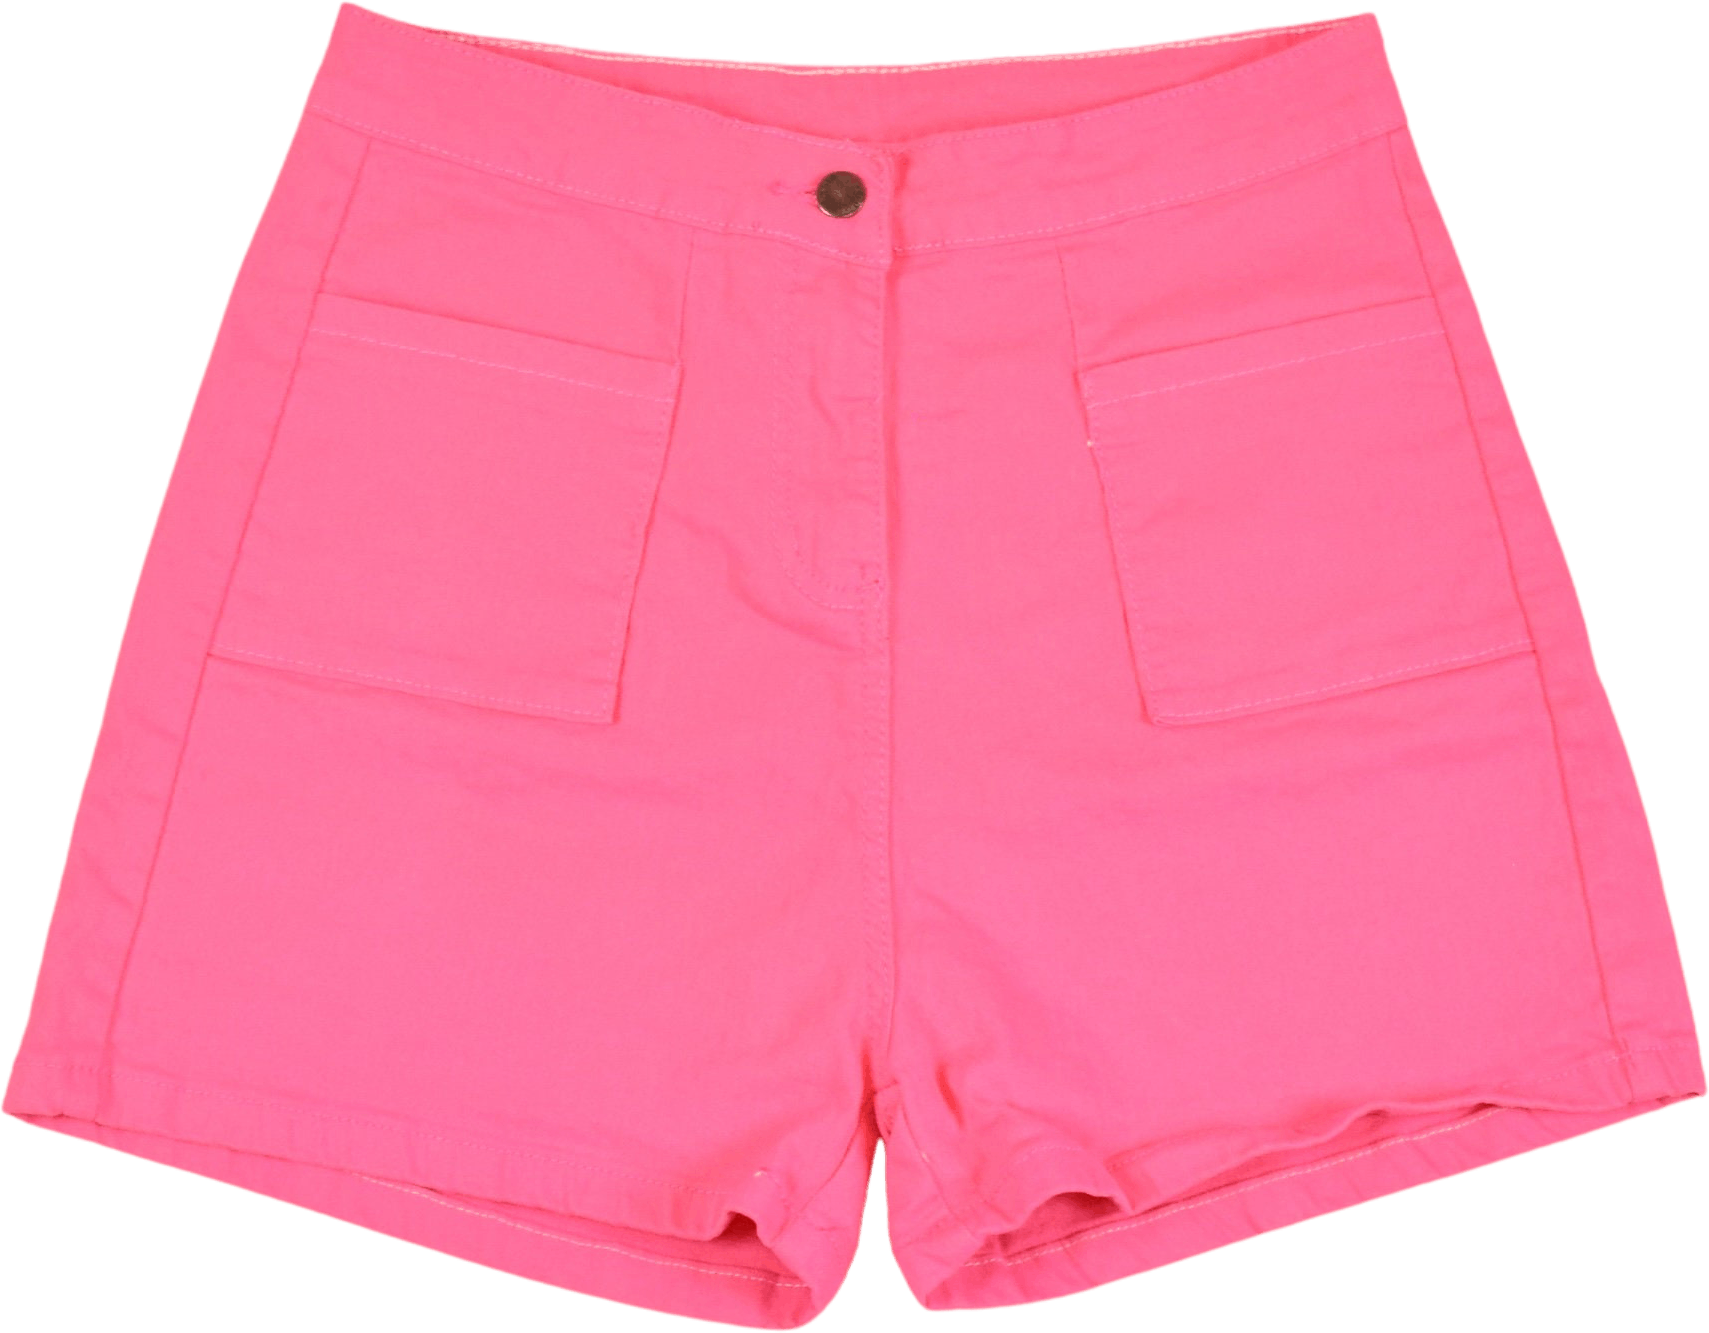 Vintage 00’s Hot Pink High Waisted Denim Shorts by Falmer Heritage ...